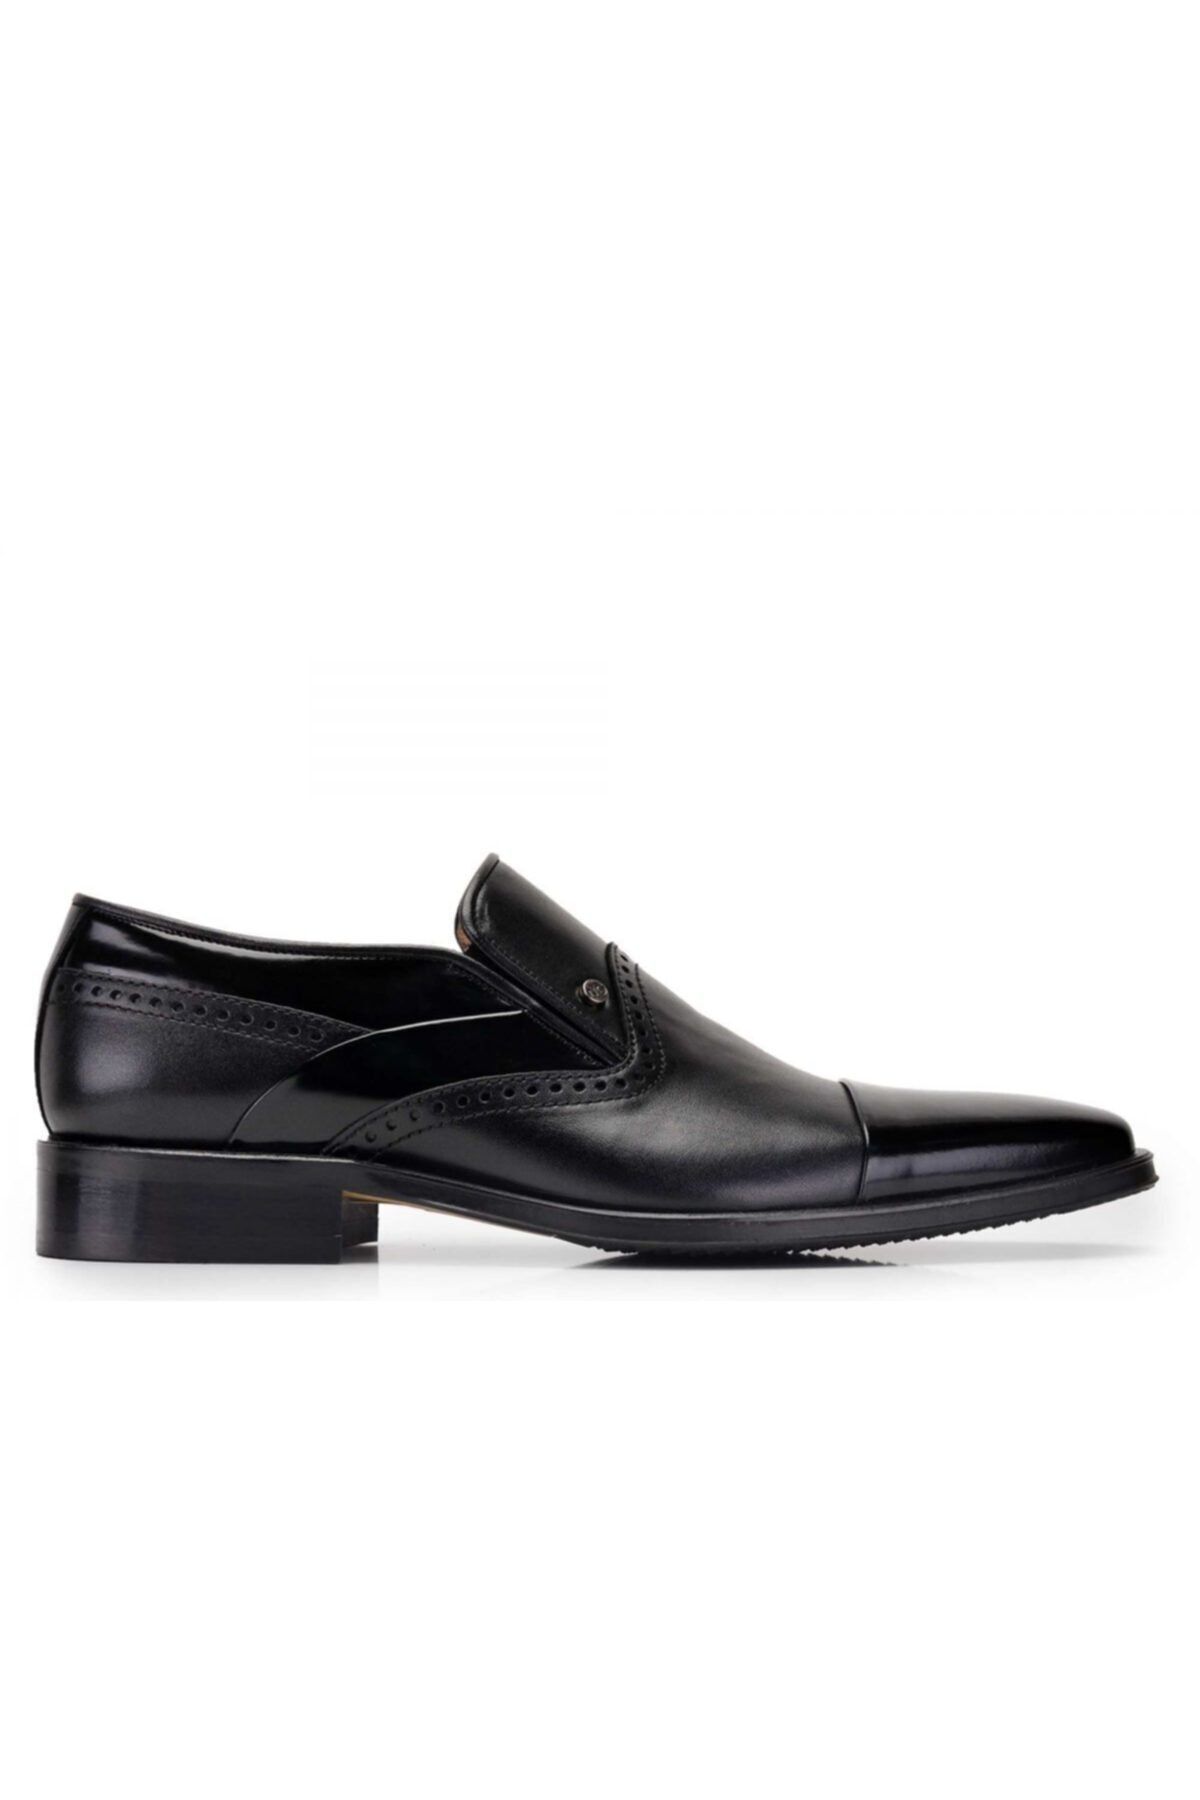 Nevzat Onay Hakiki Deri Siyah Klasik Loafer Erkek Ayakkabı -10465-